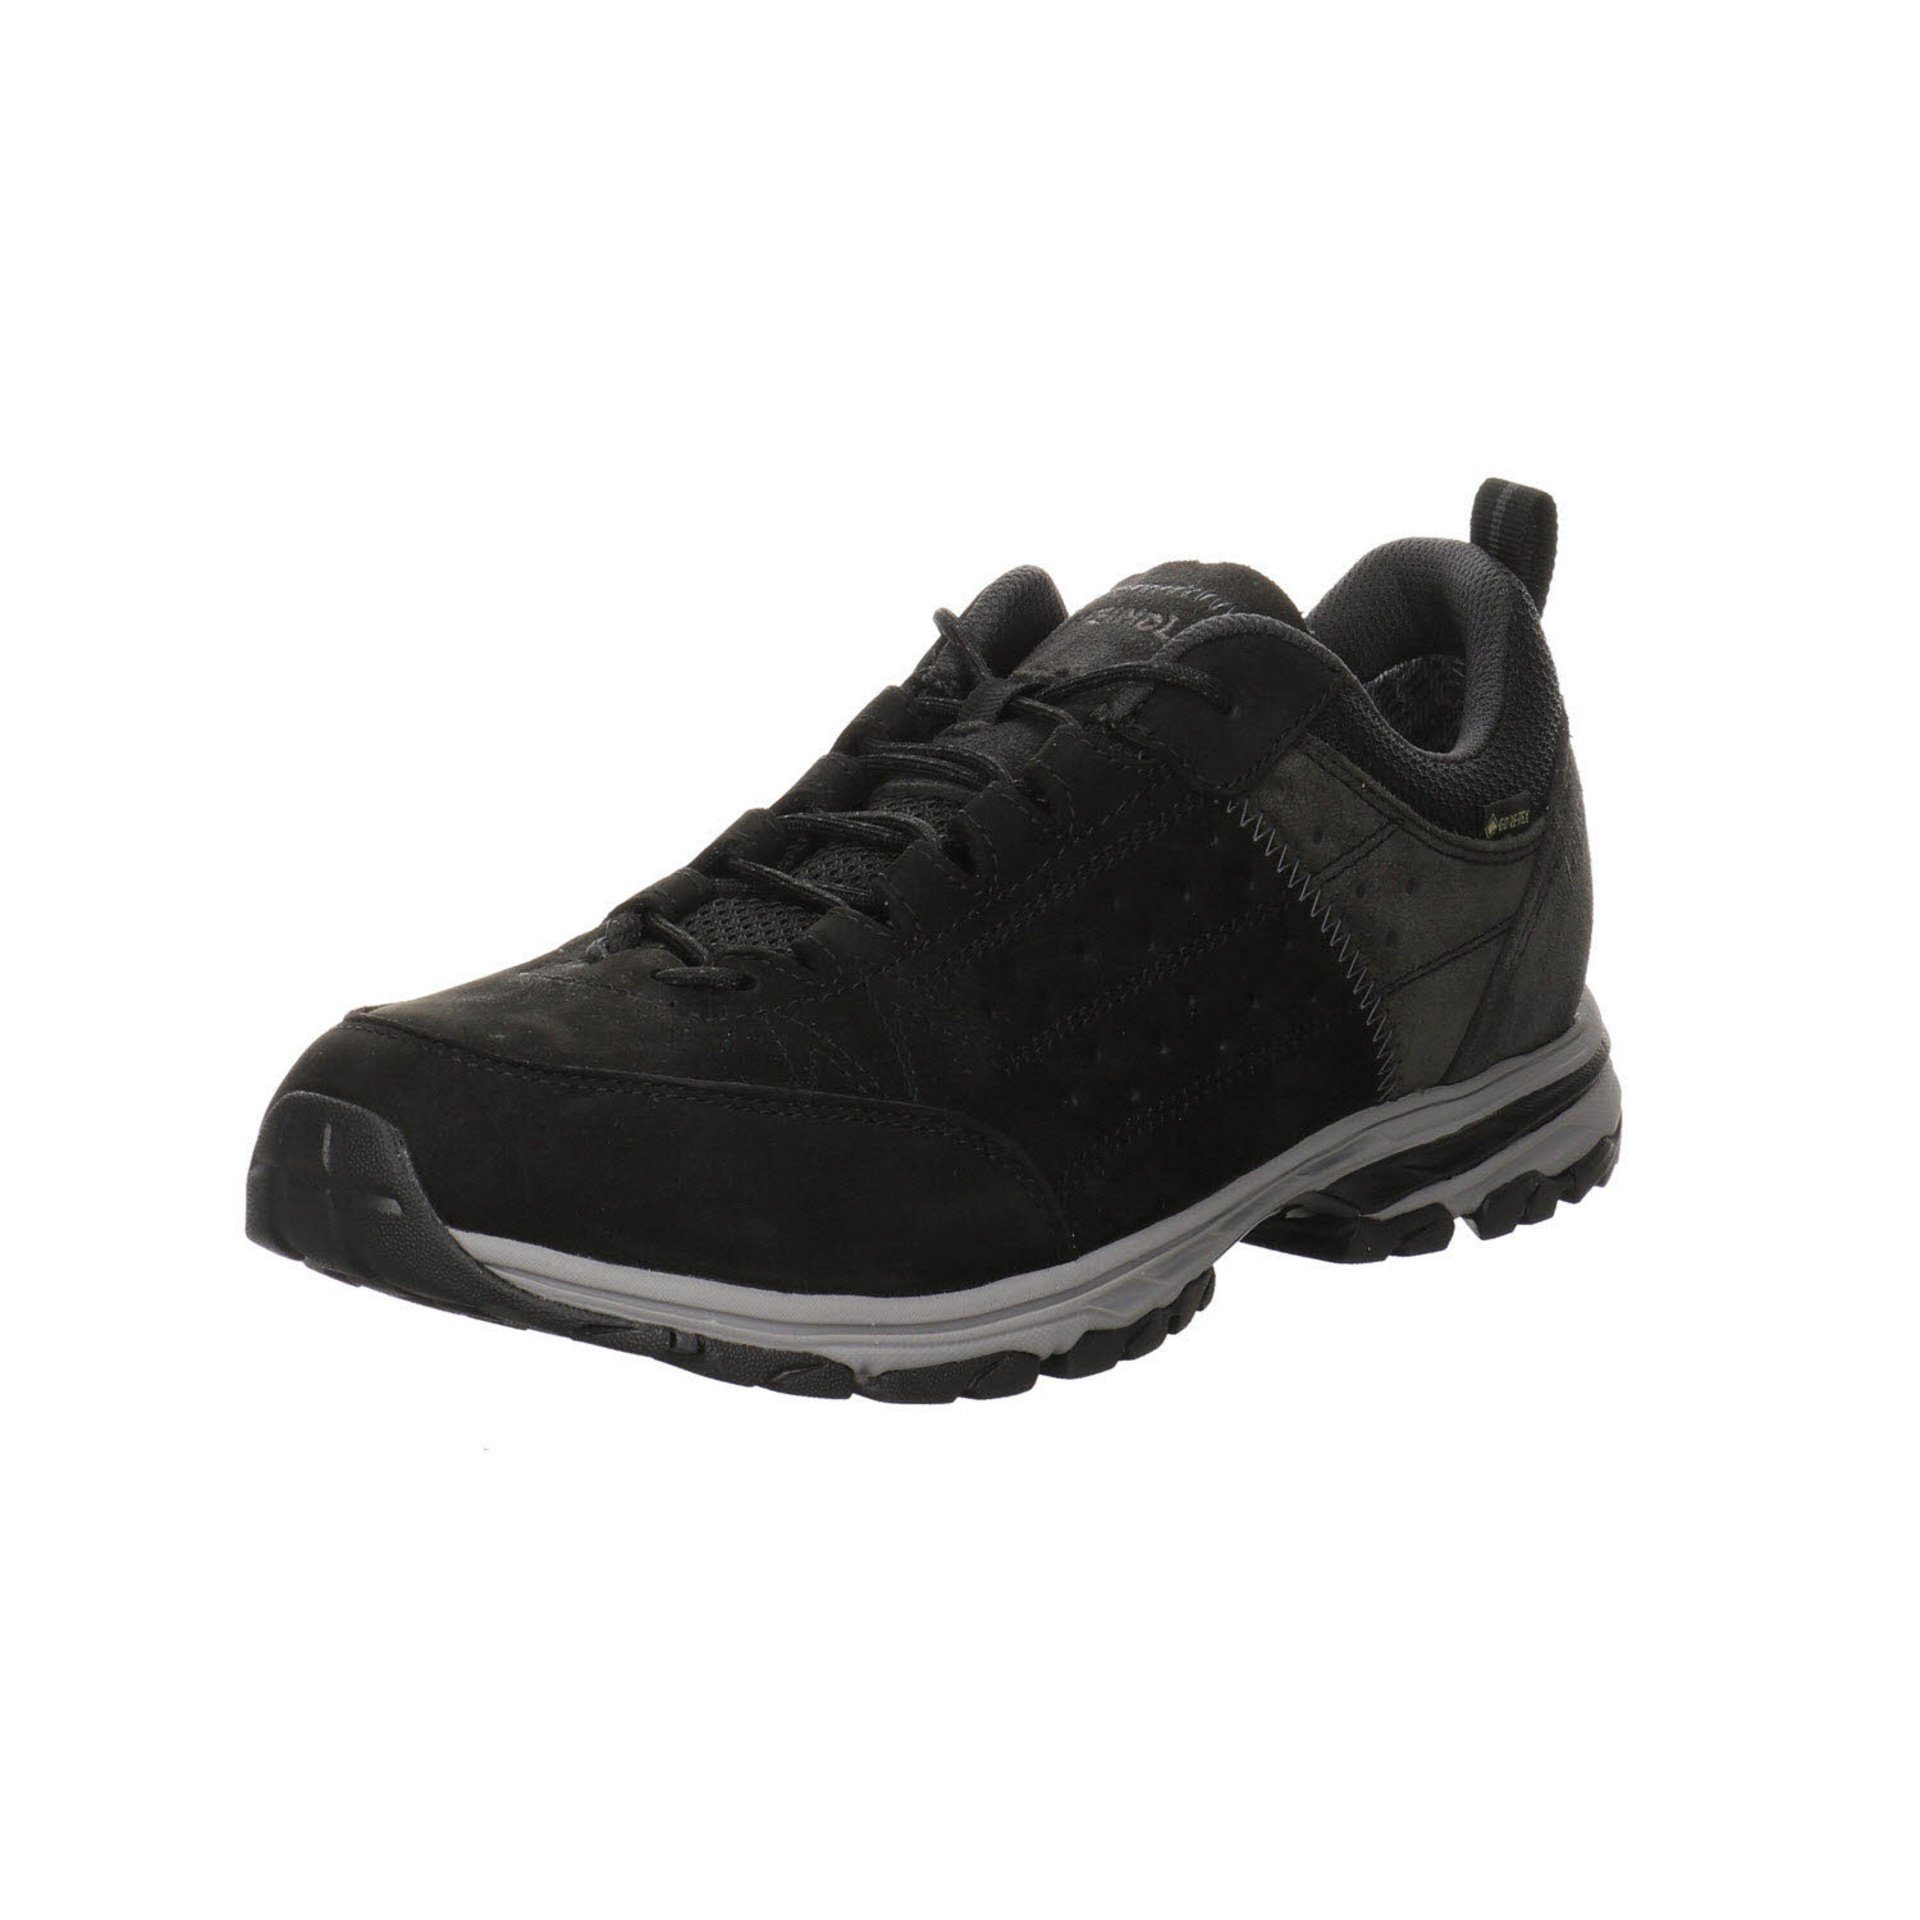 Meindl Herren Outdoor Schuhe GTX Outdoorschuh schwarz dunkel Durban Leder-/Textilkombination Outdoorschuh